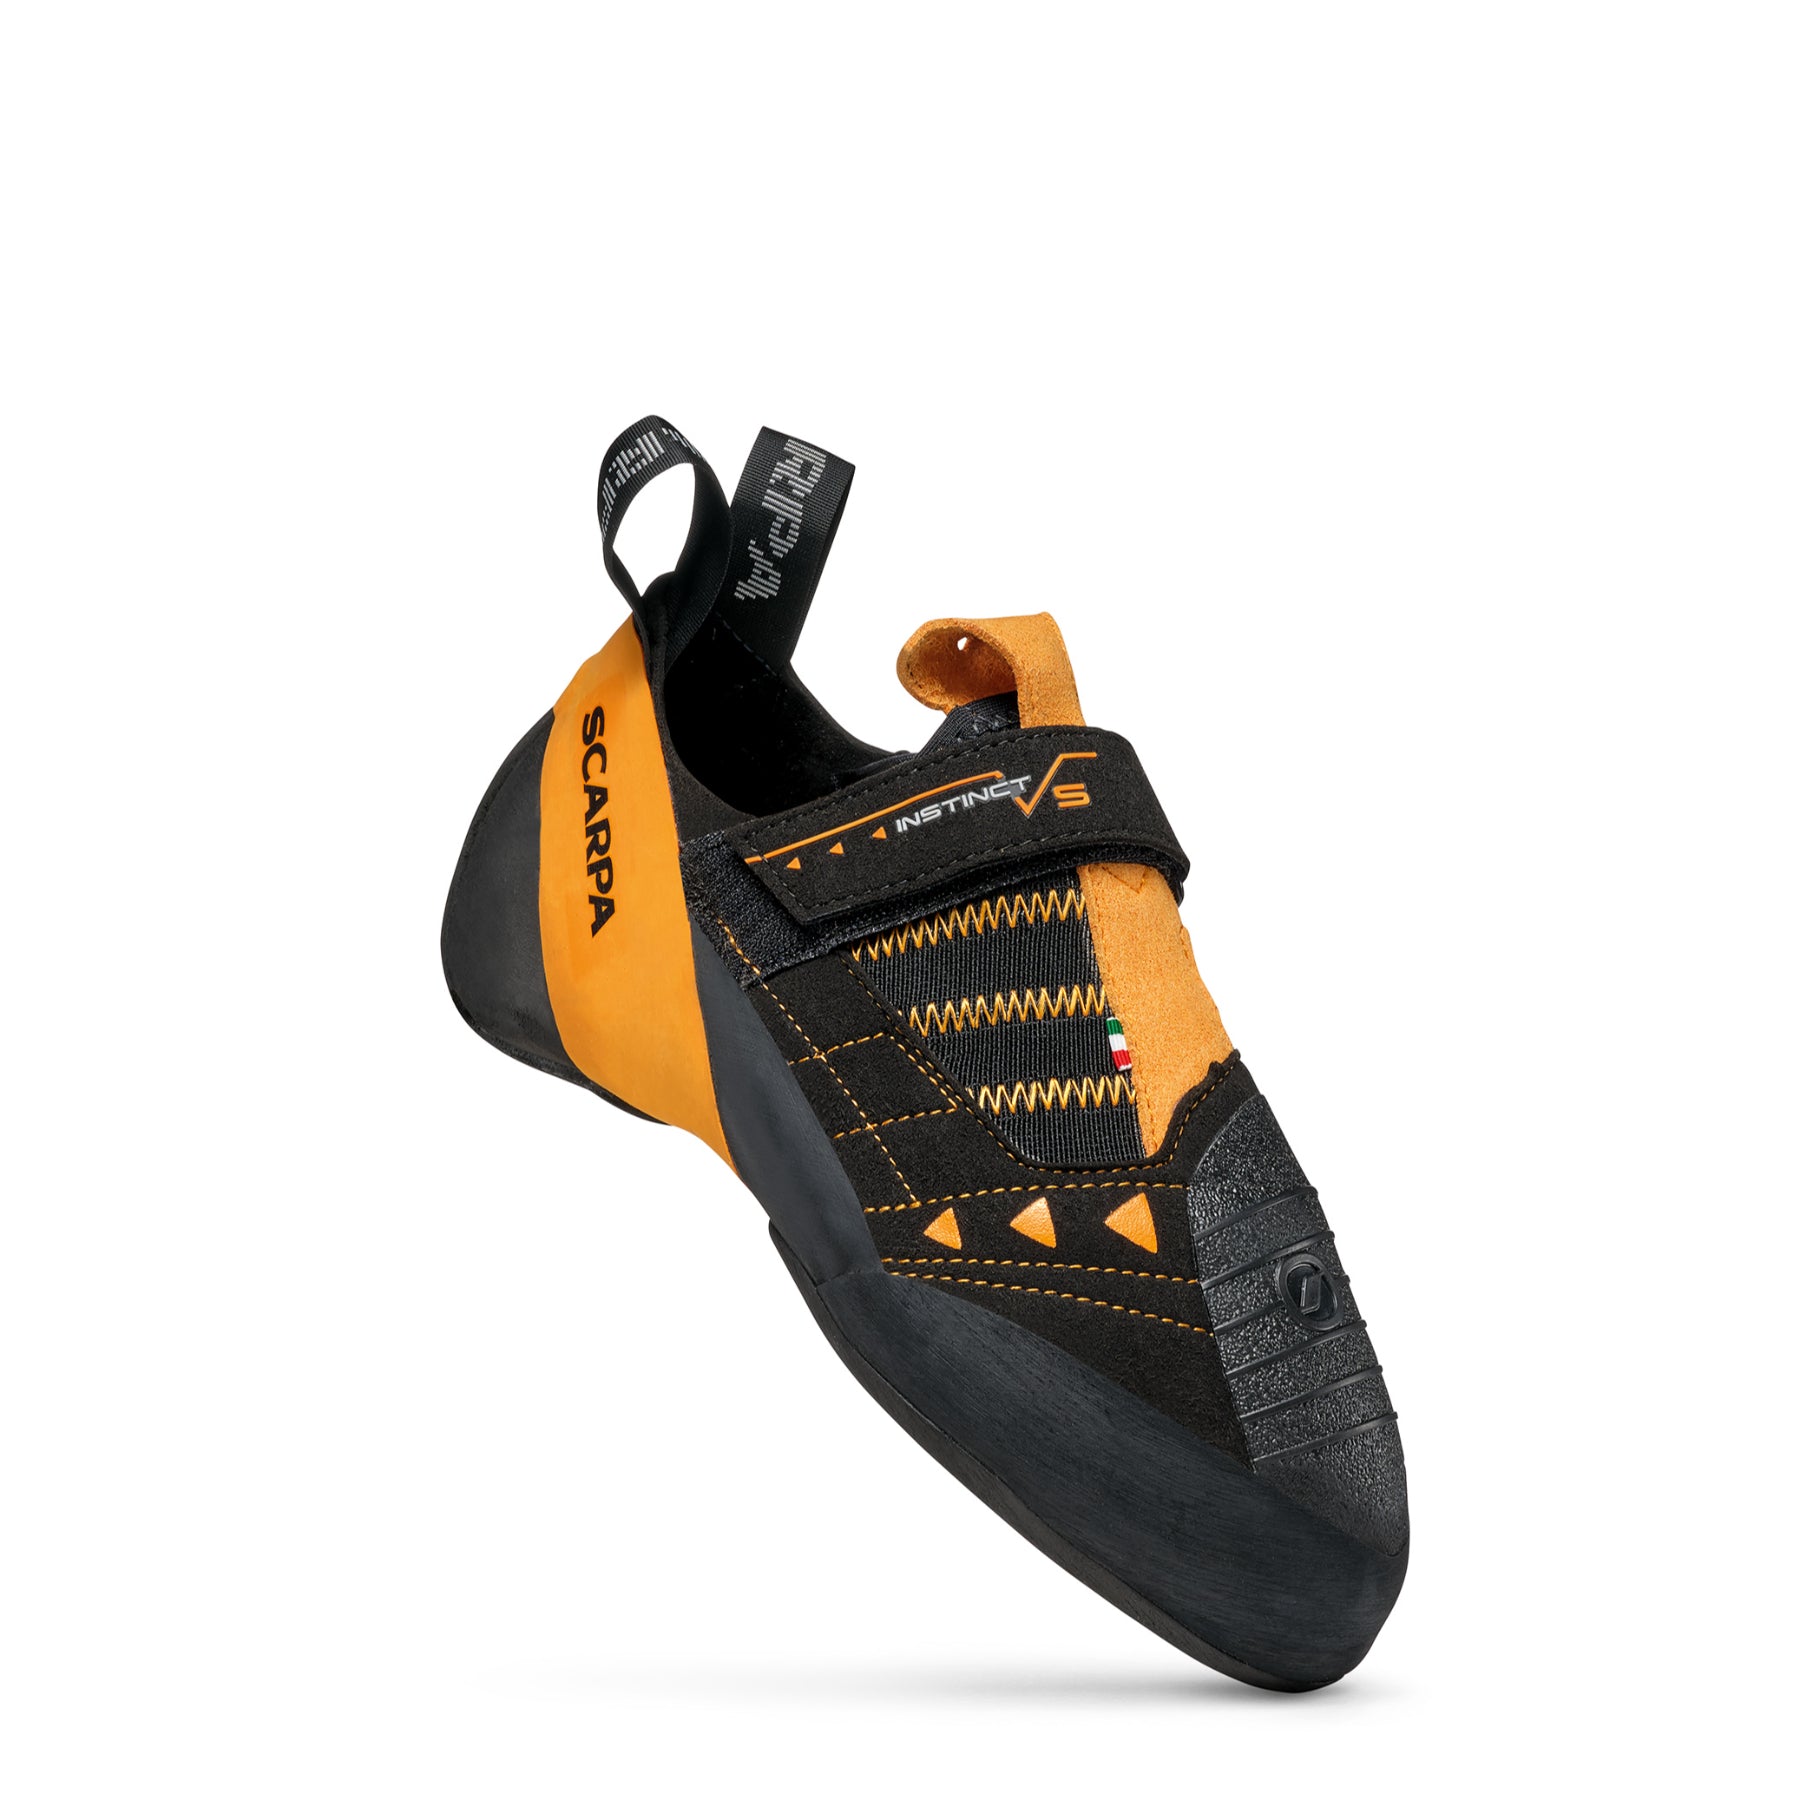 Scarpa Instinct VS climbing shoe, in black and orange colours